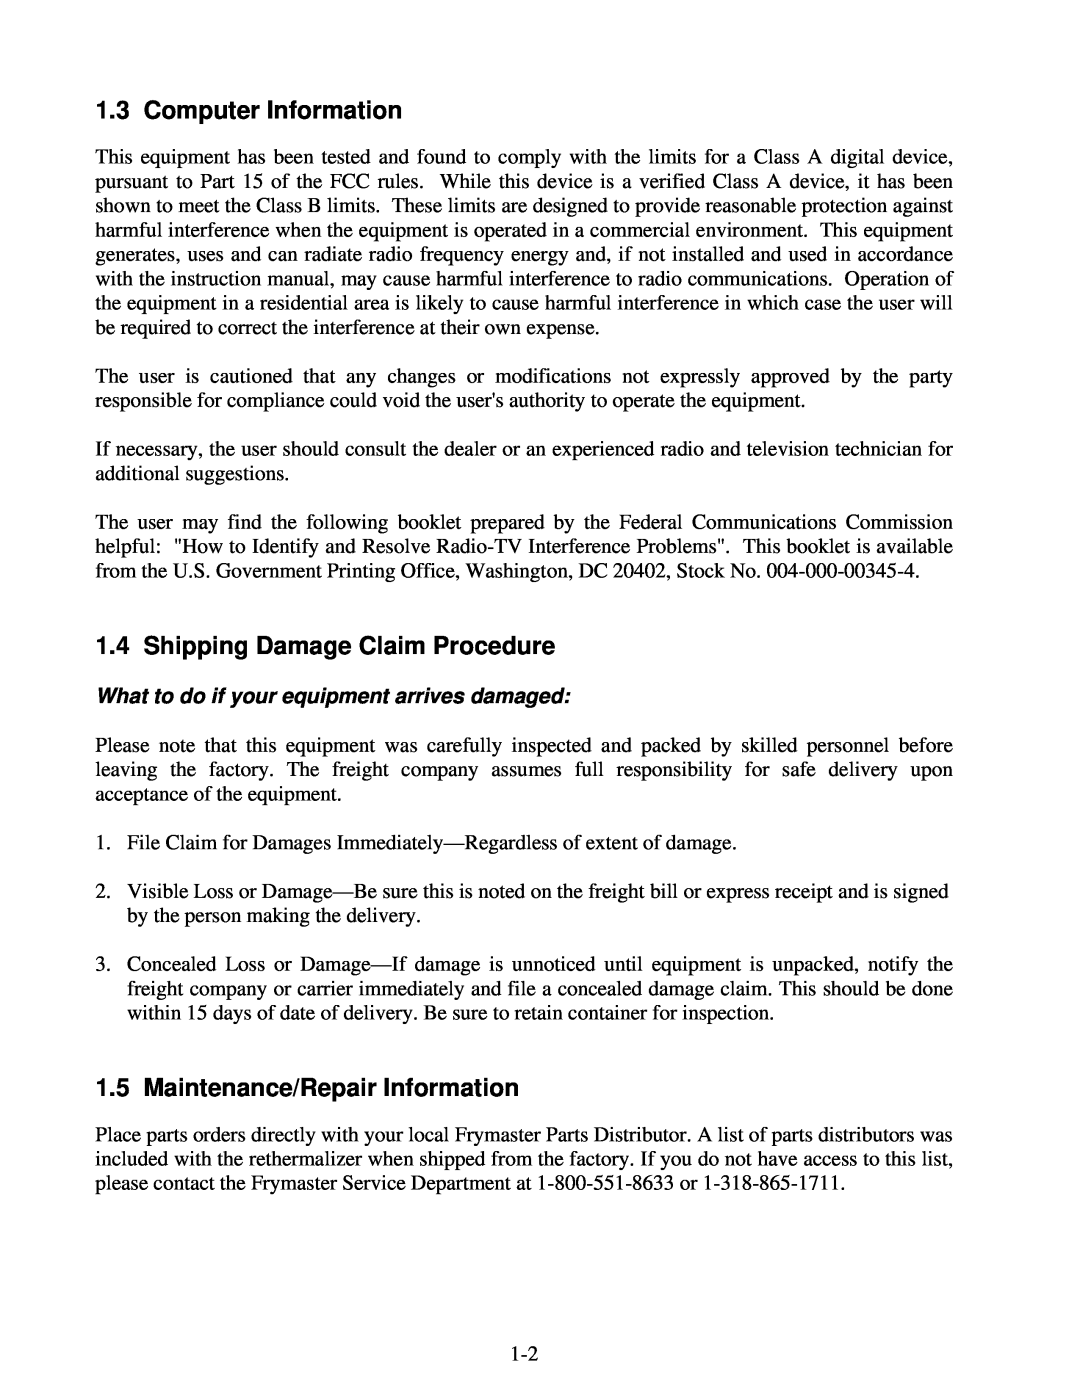 Frymaster FGP55 operation manual Computer Information, Shipping Damage Claim Procedure, Maintenance/Repair Information 